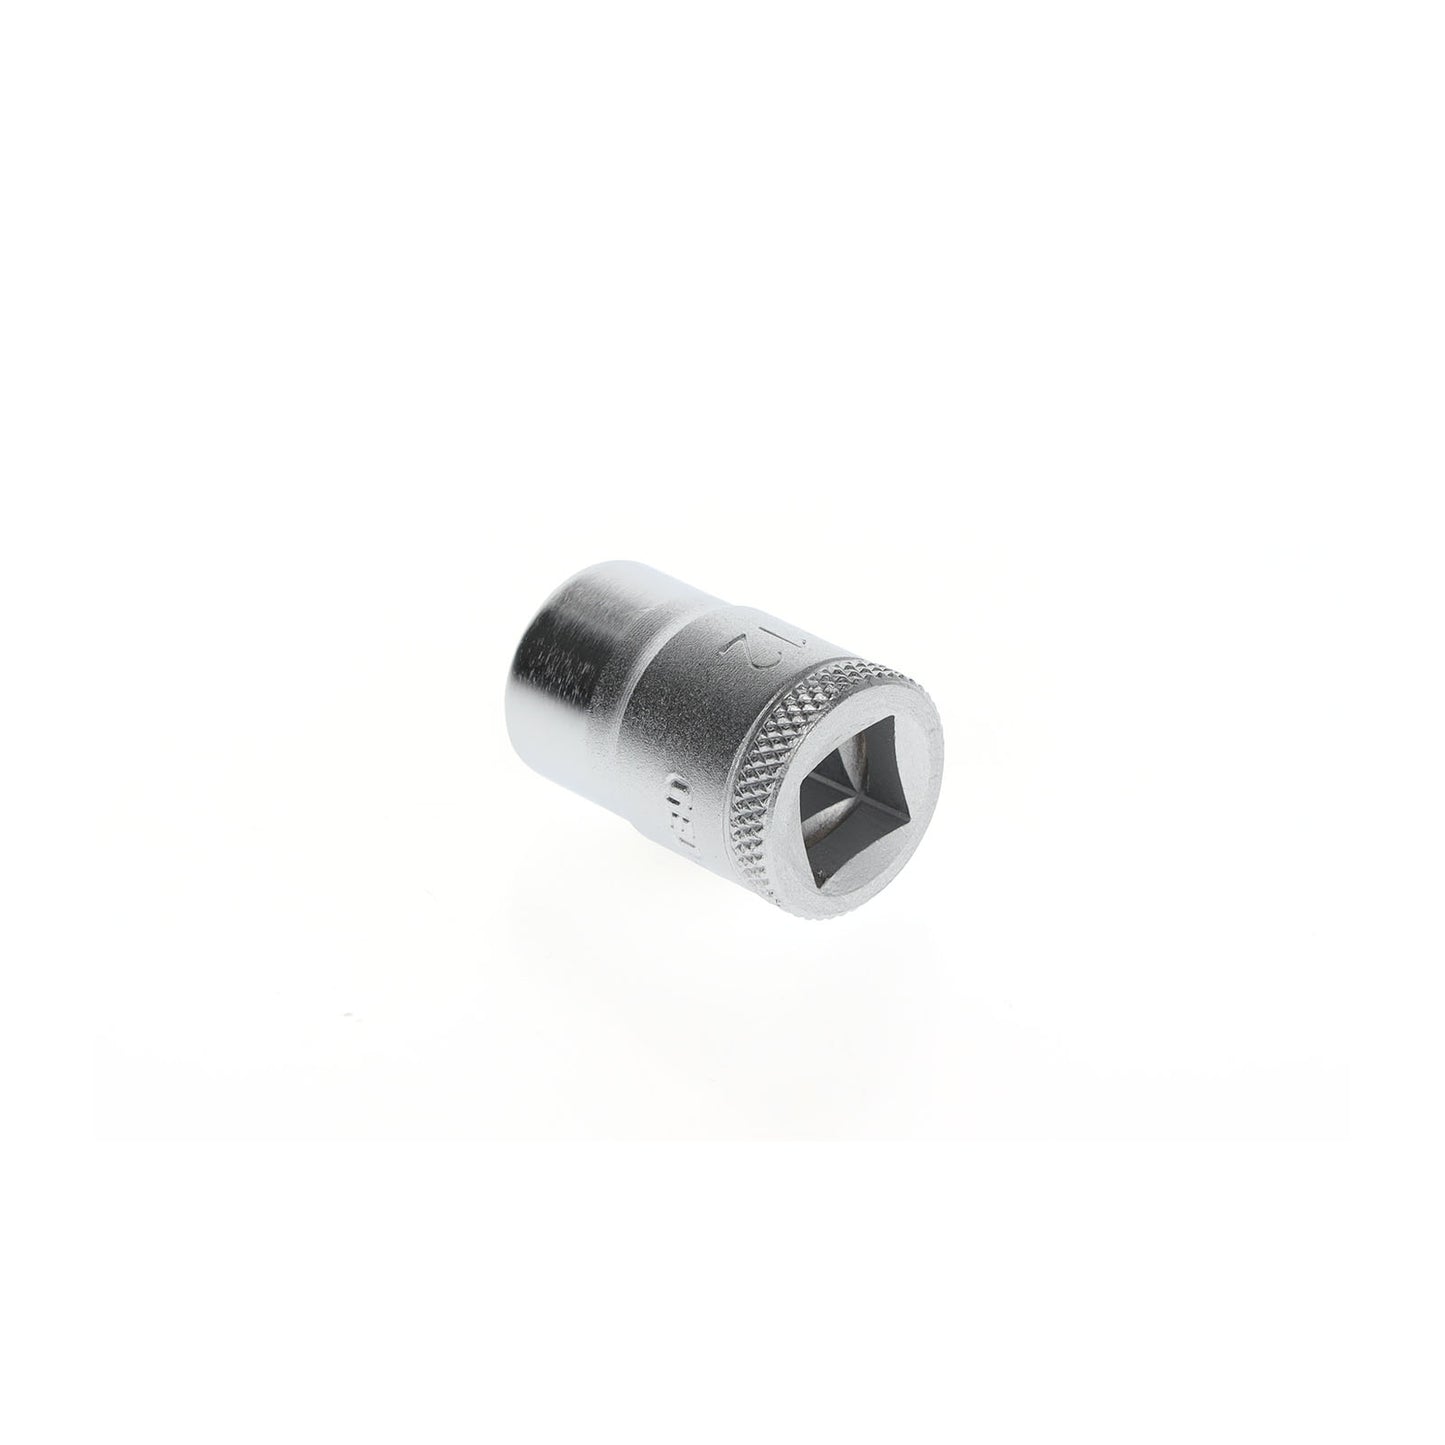 GEDORE 30 12 - Hexagonal socket 3/8", 12 mm (6233930)